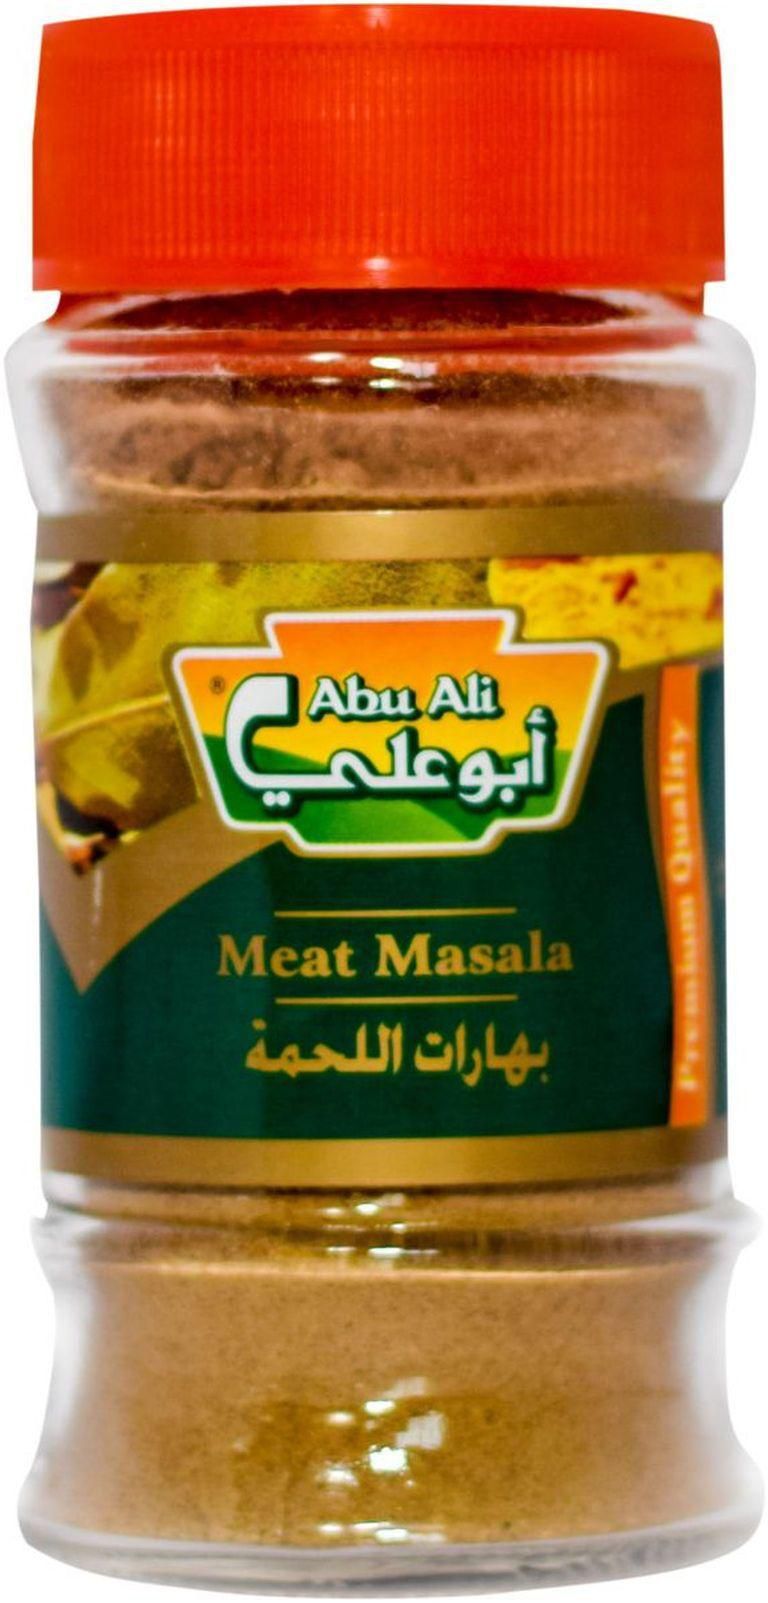 Abu Ali Meat Masala 130 g